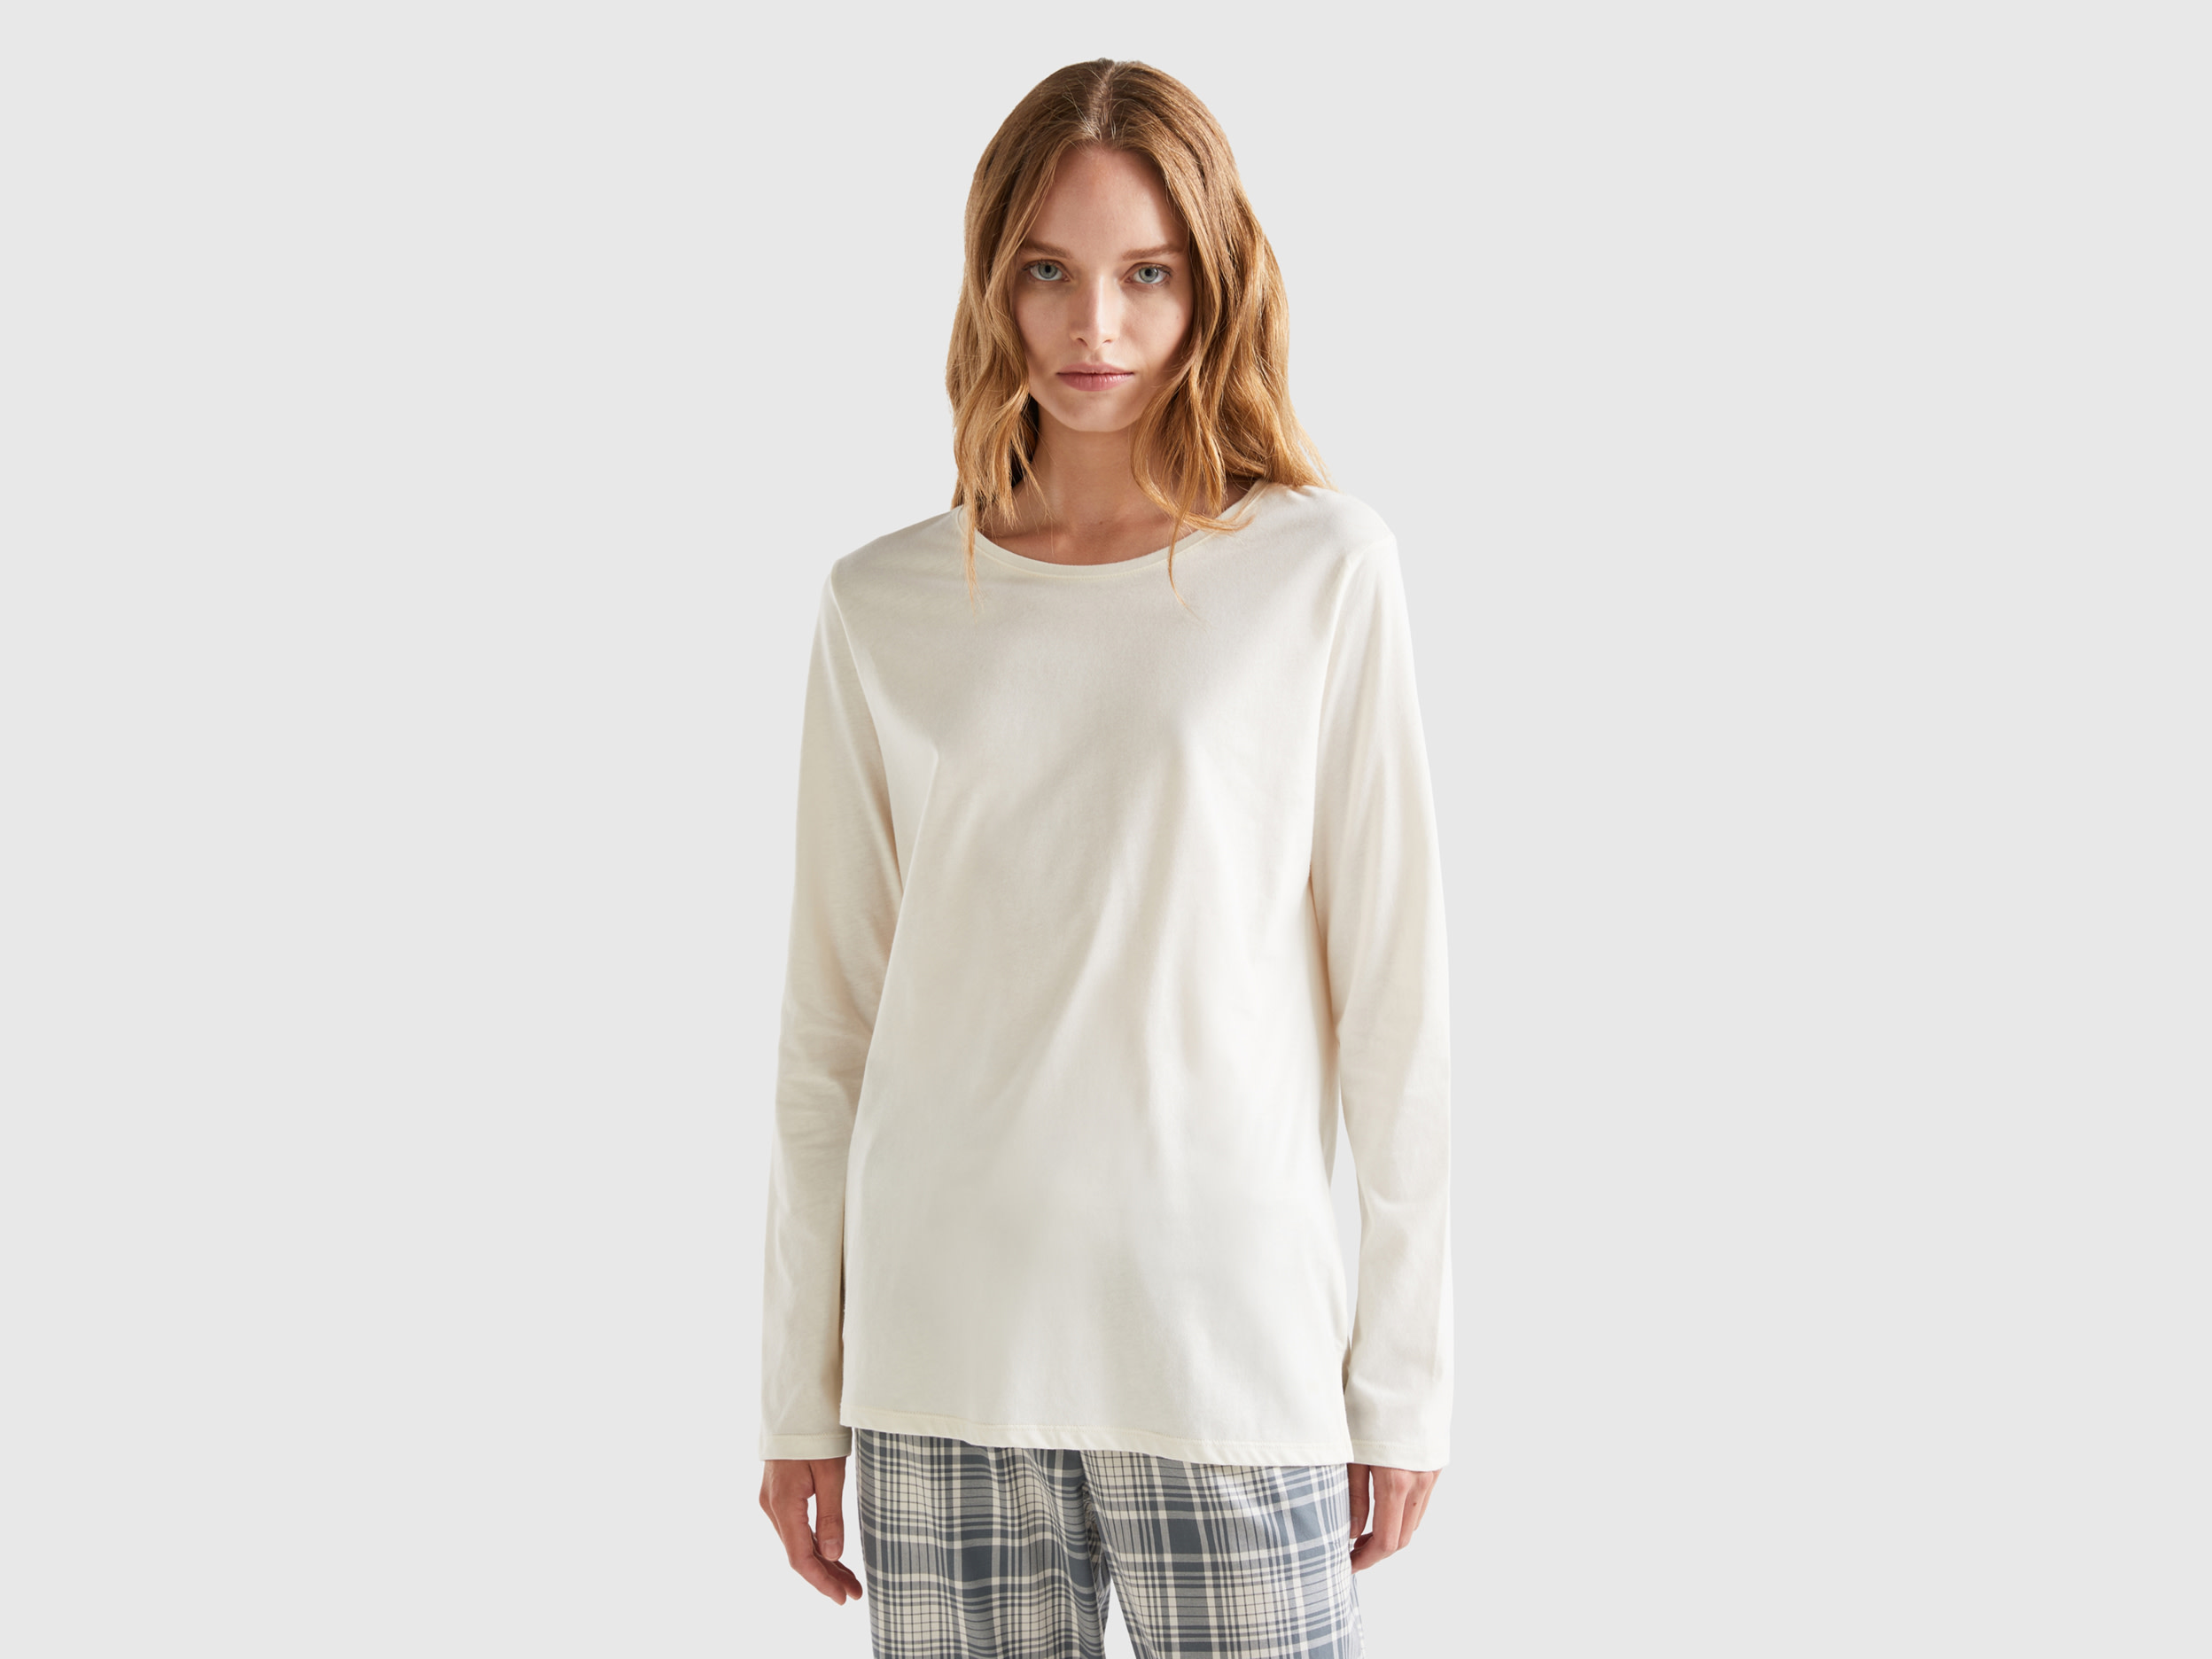 Benetton, Long Fiber Cotton T-shirt, size S, Creamy White, Women